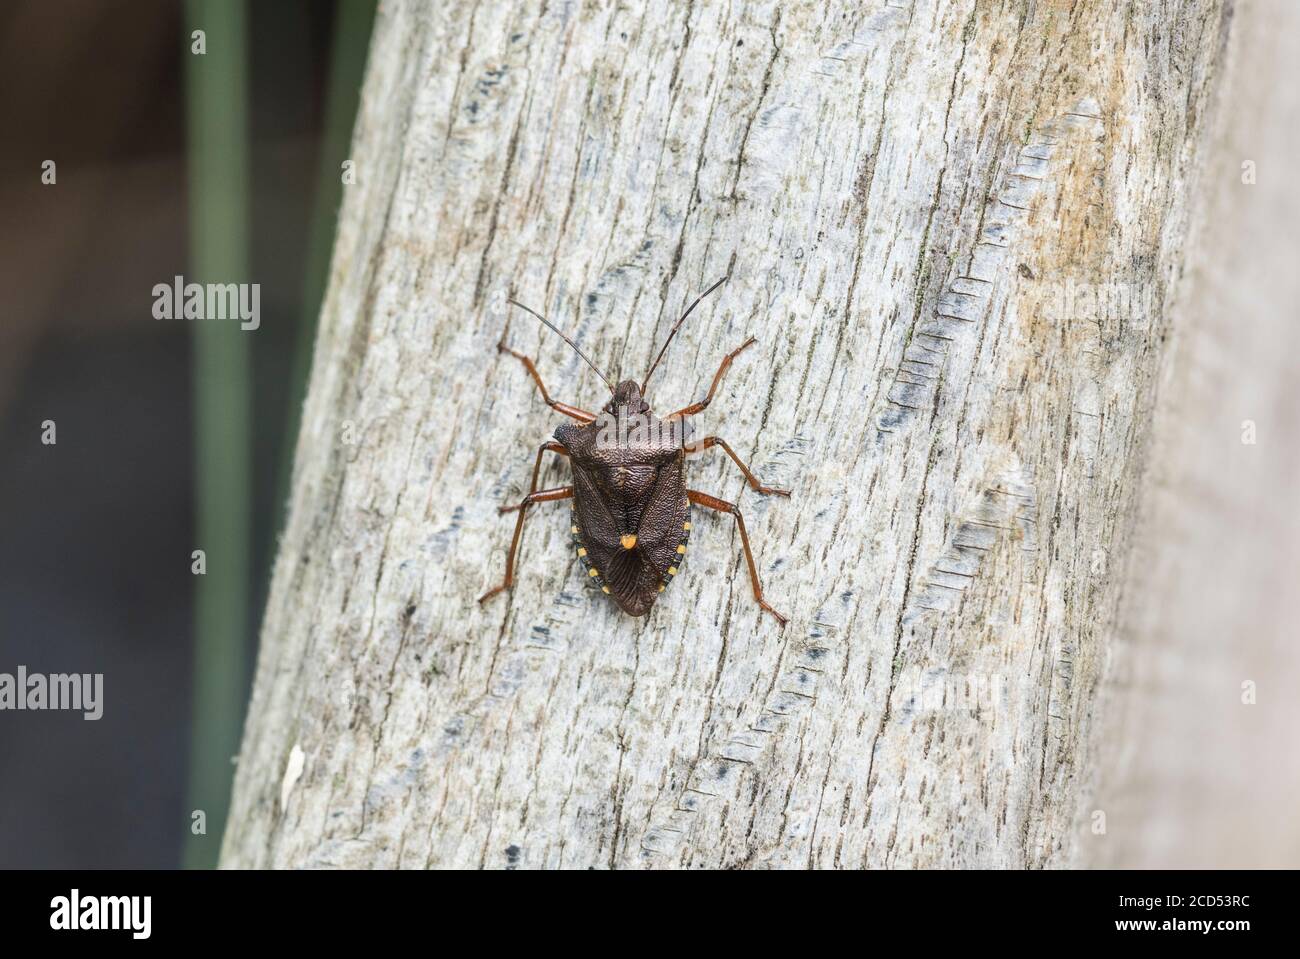 Forest Bug or Red-Legged Shield Bug (Pentatoma rufipes) Stock Photo